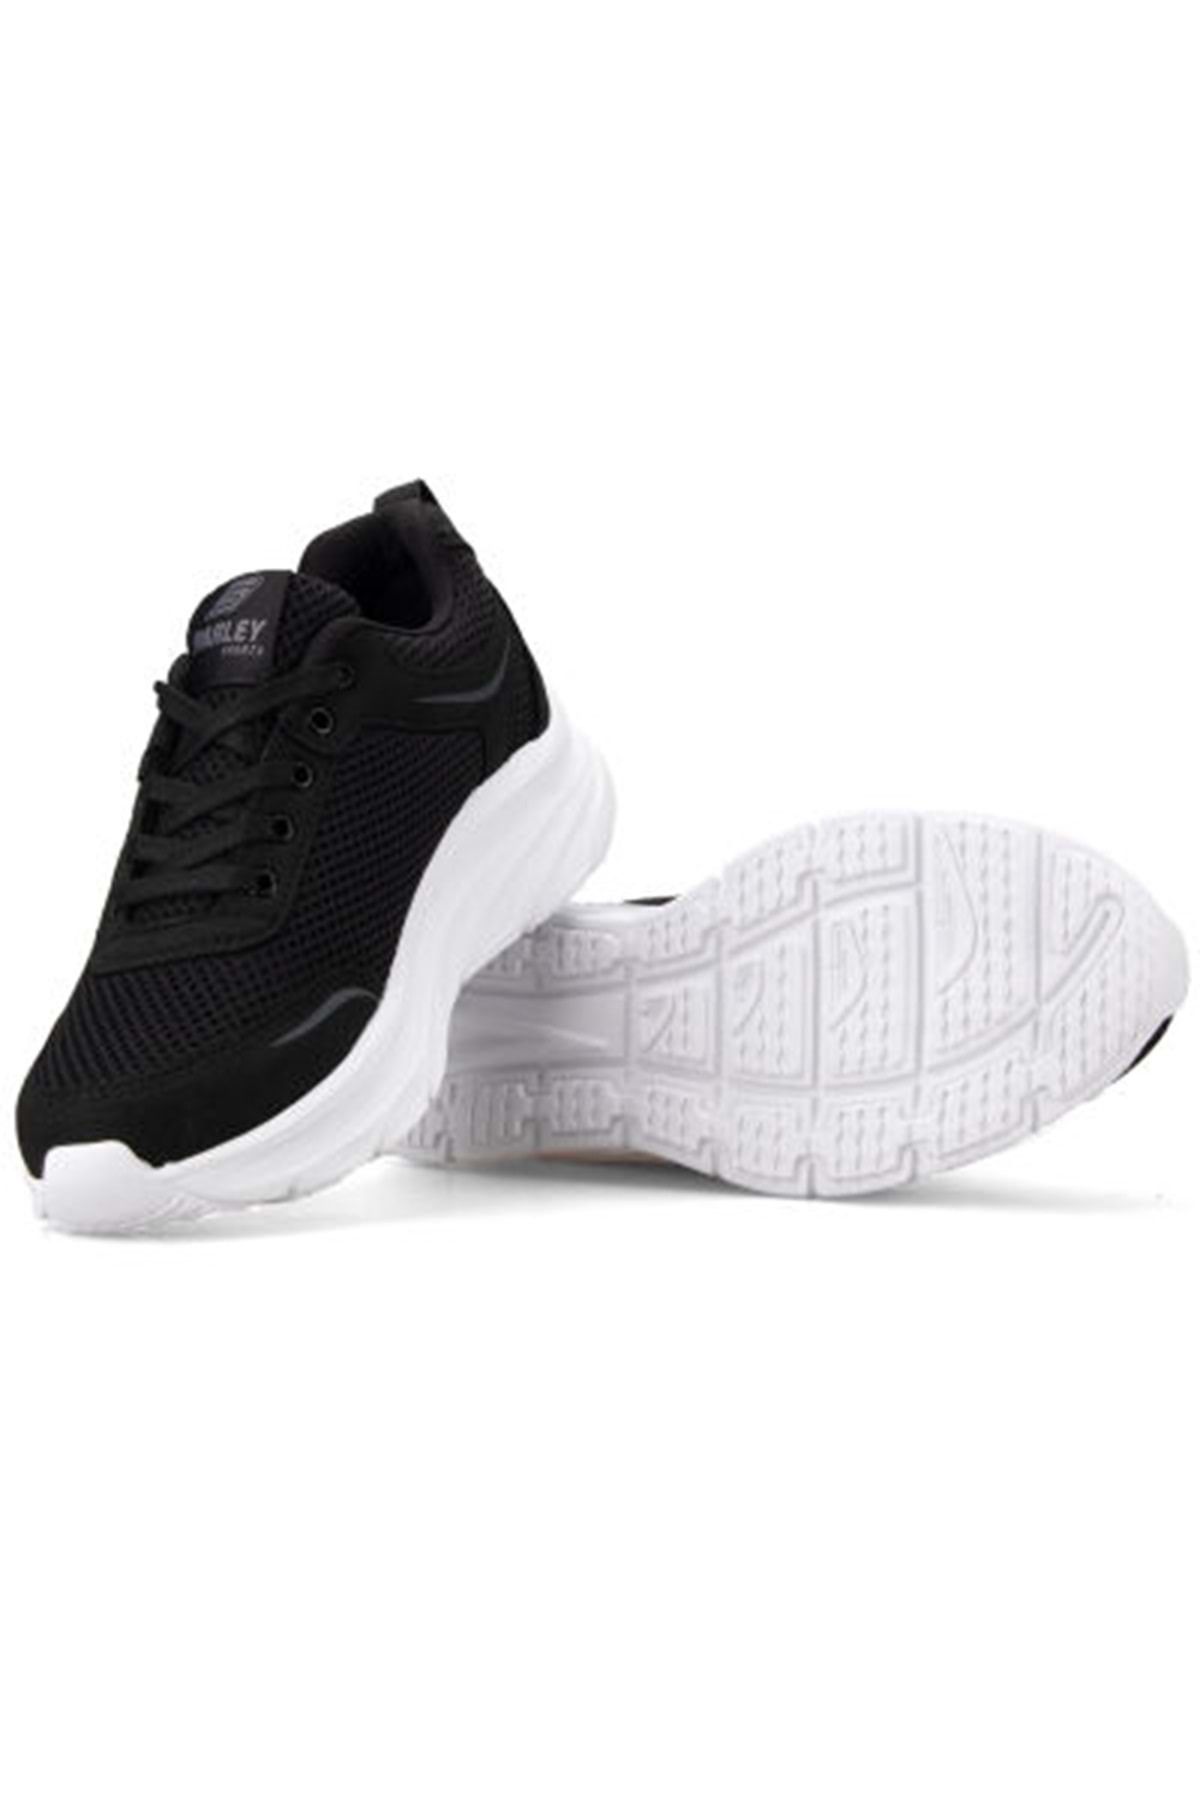 ÇİĞDEM KUNDURA Çiğdem Siyah-beyaz Unisex Spor Ayakkabı - Siyah-beyaz - 36 - St01780-siyah-beyaz-36